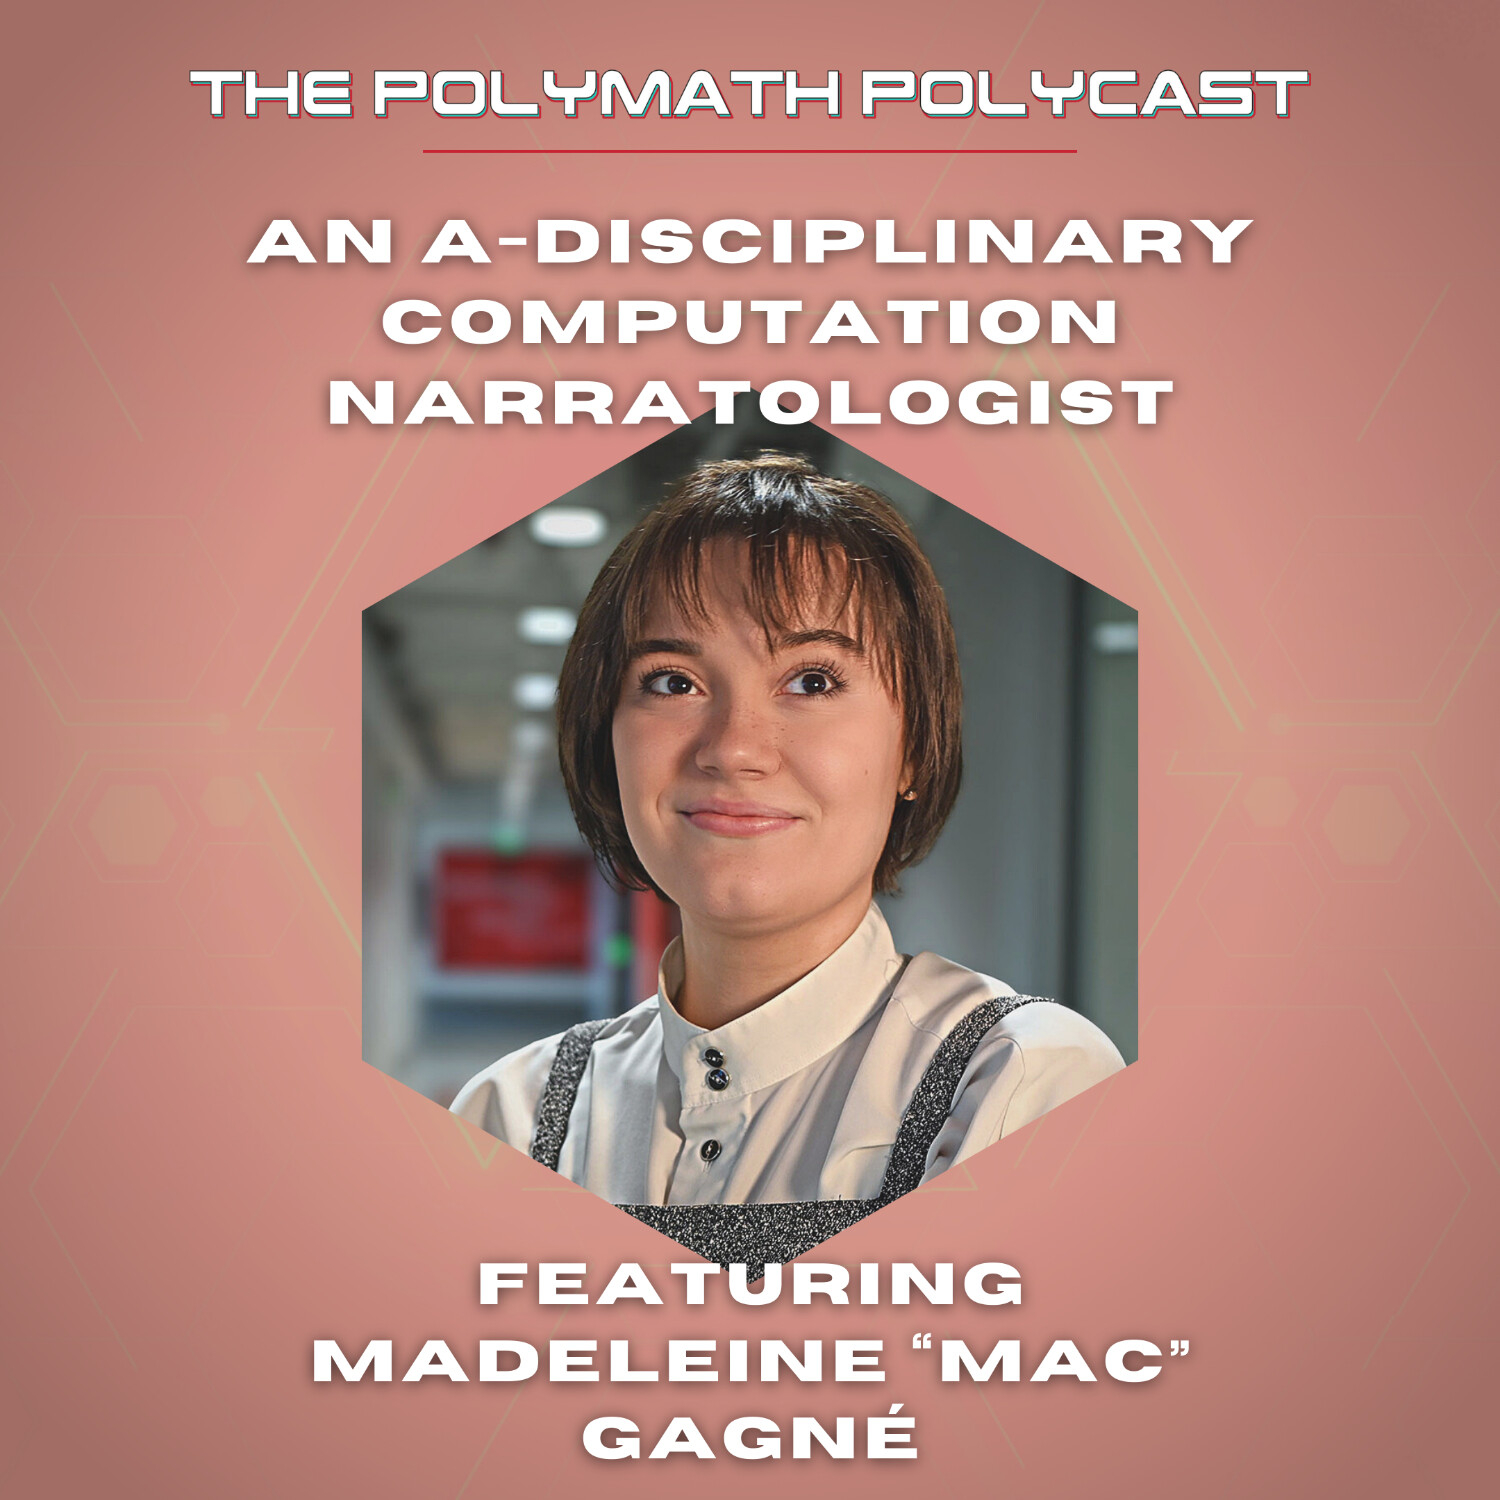 An A-disciplinary Computation Narratologist with Madeleine “Mac” Gagné #ThePolymathPolyCast